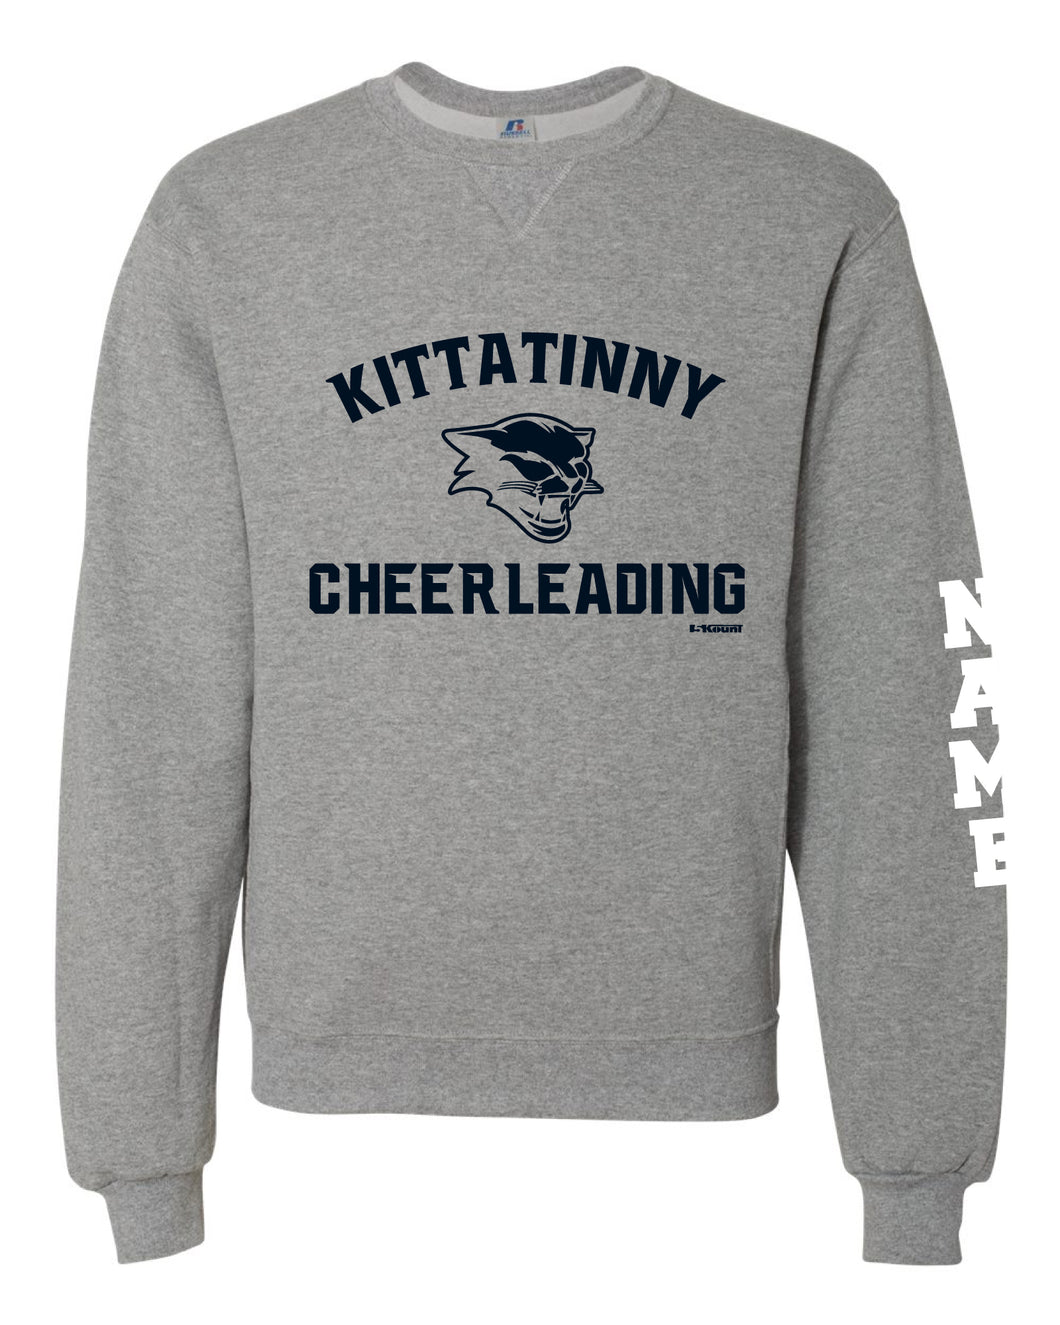 Kittatinny Cheer Russell Athletic Cotton Crewneck Sweatshirt - Gray - 5KounT2018